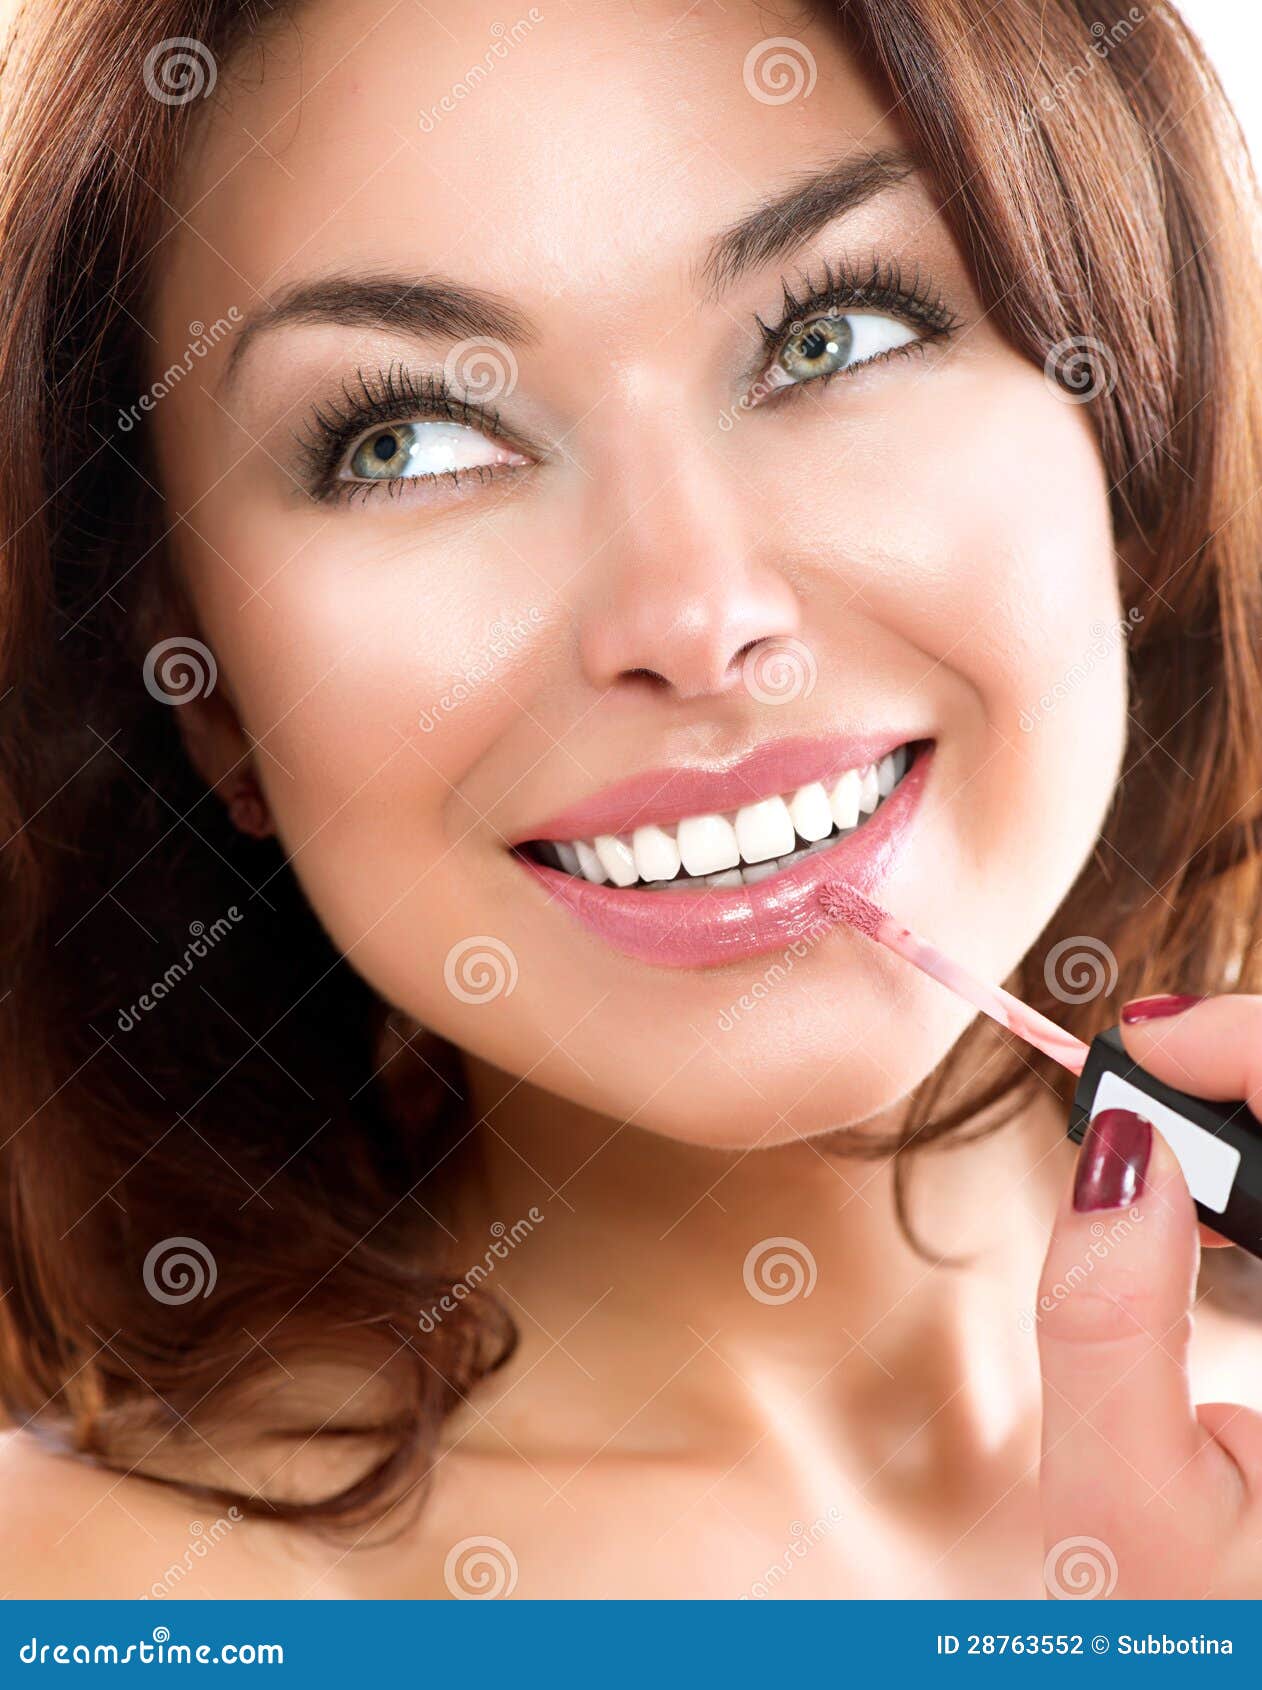 beauty girl applying lipgloss